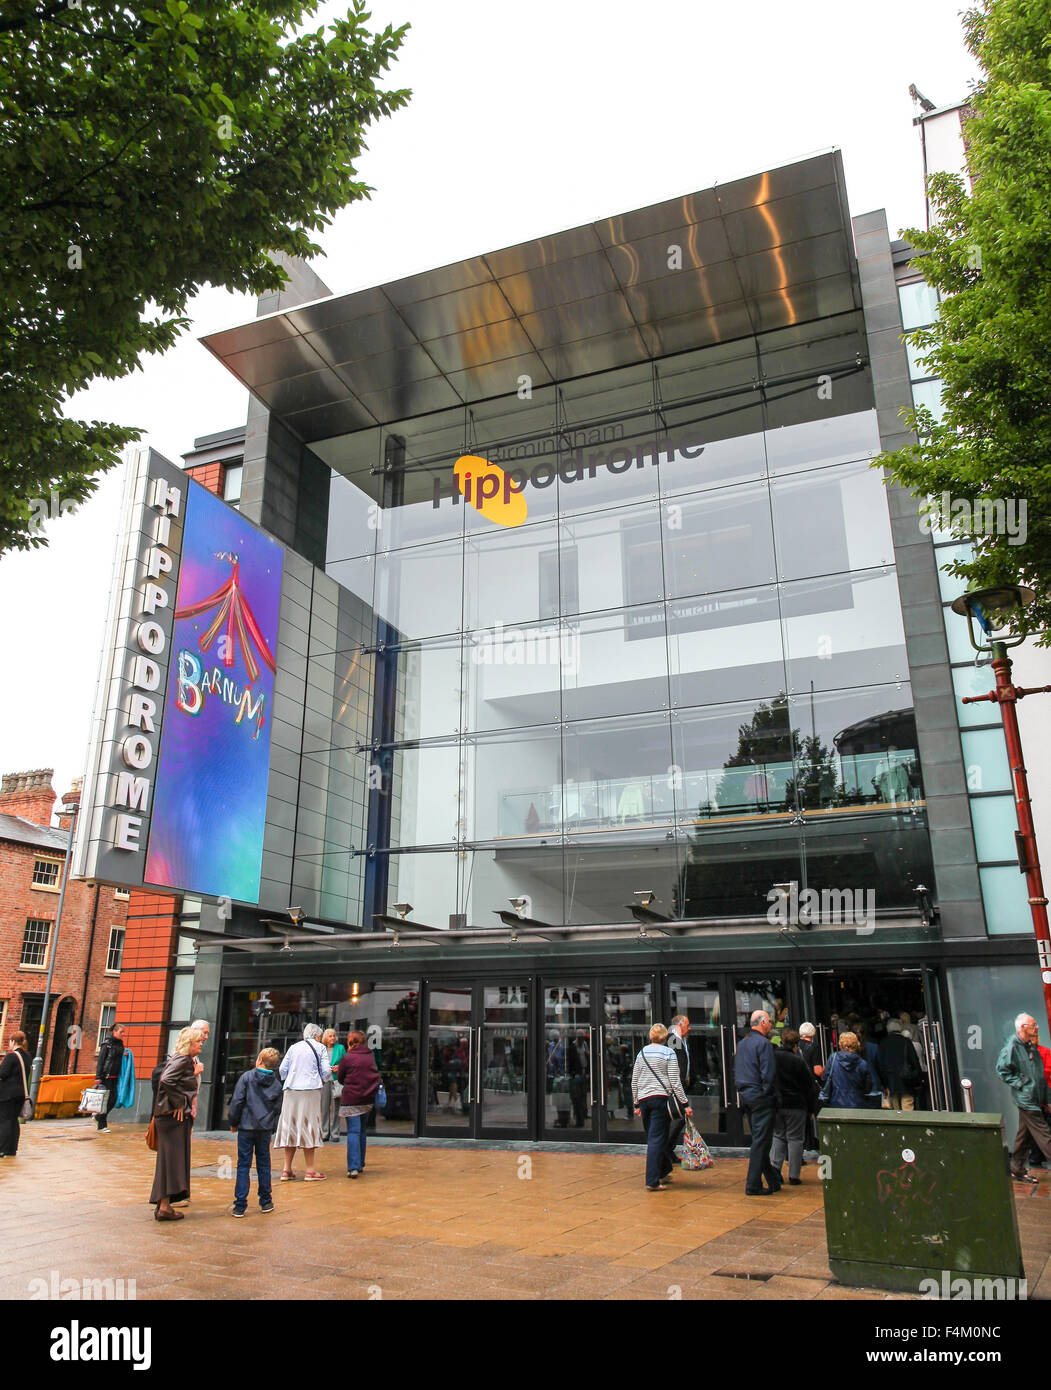 The Birmingham Hippodrome is a theatre situated on Hurst Street Birmingham West Midlands England UK Stock Photo